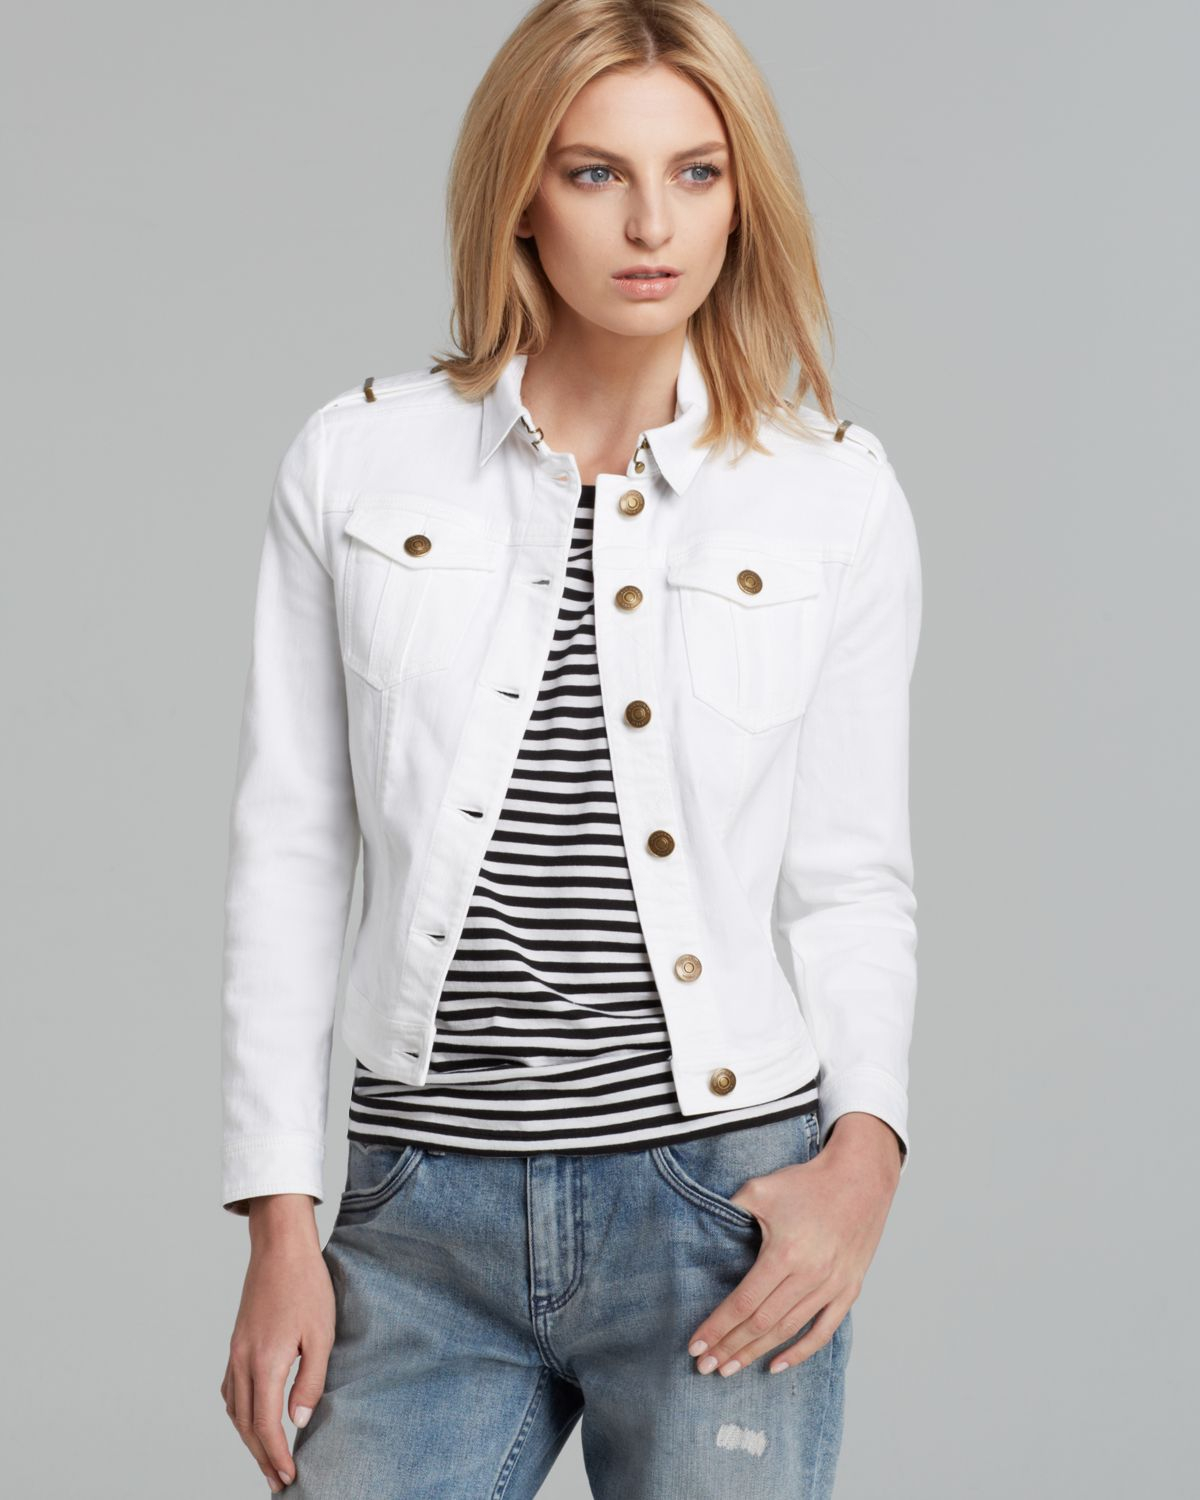 white jean jacket women